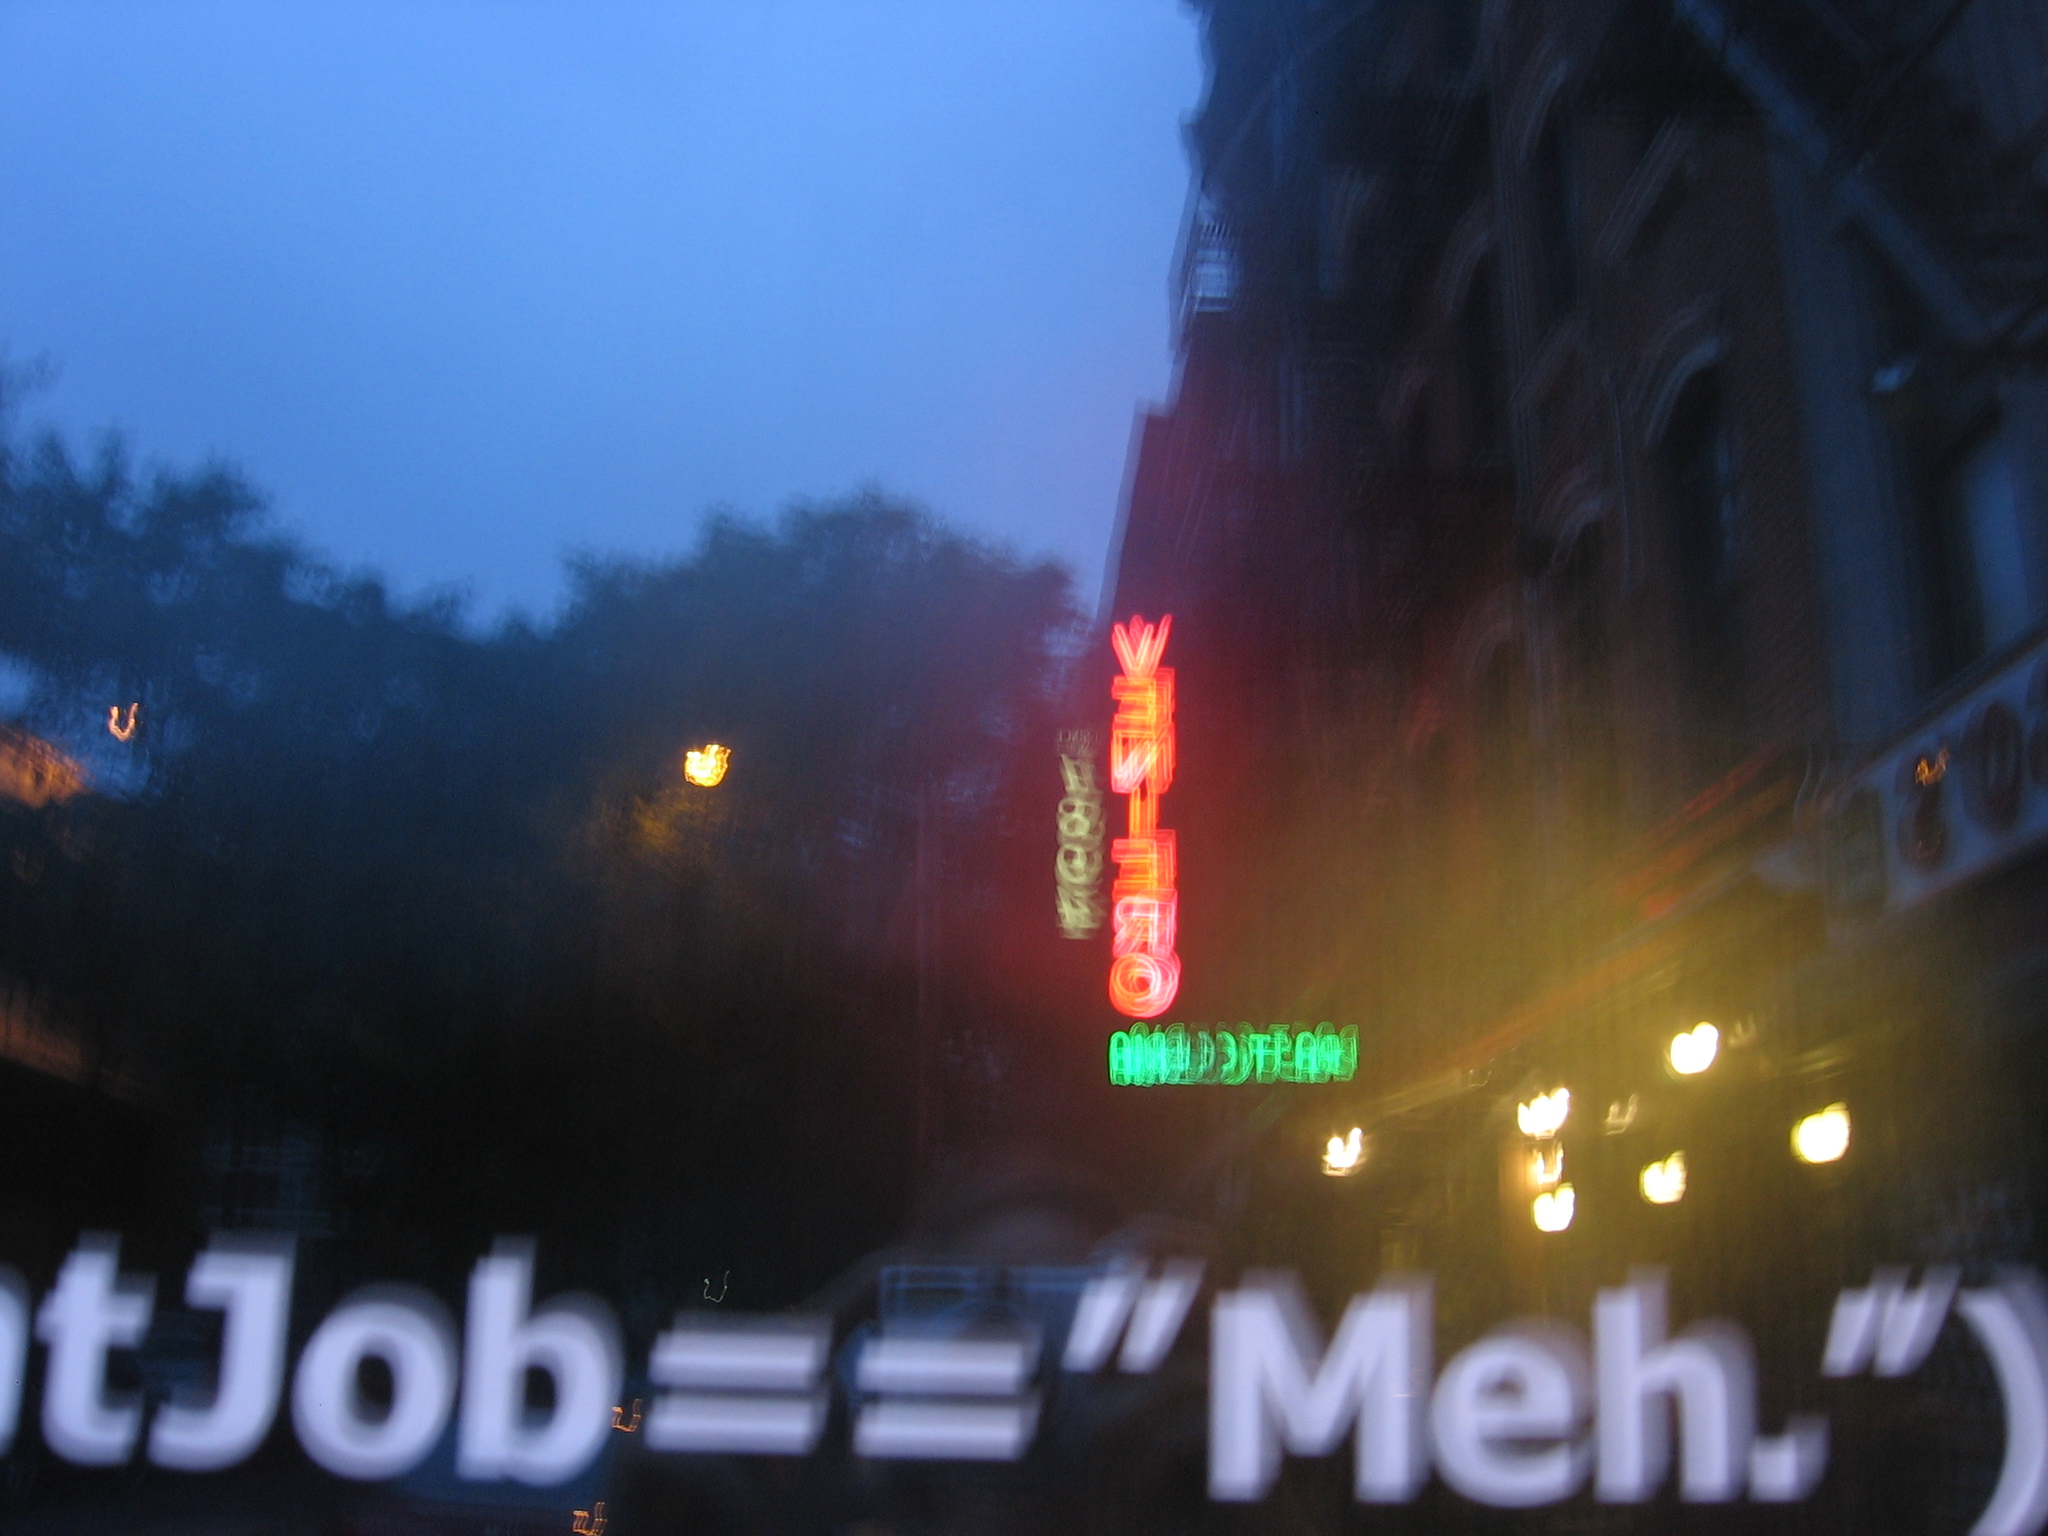 Job-meh sign.JPG